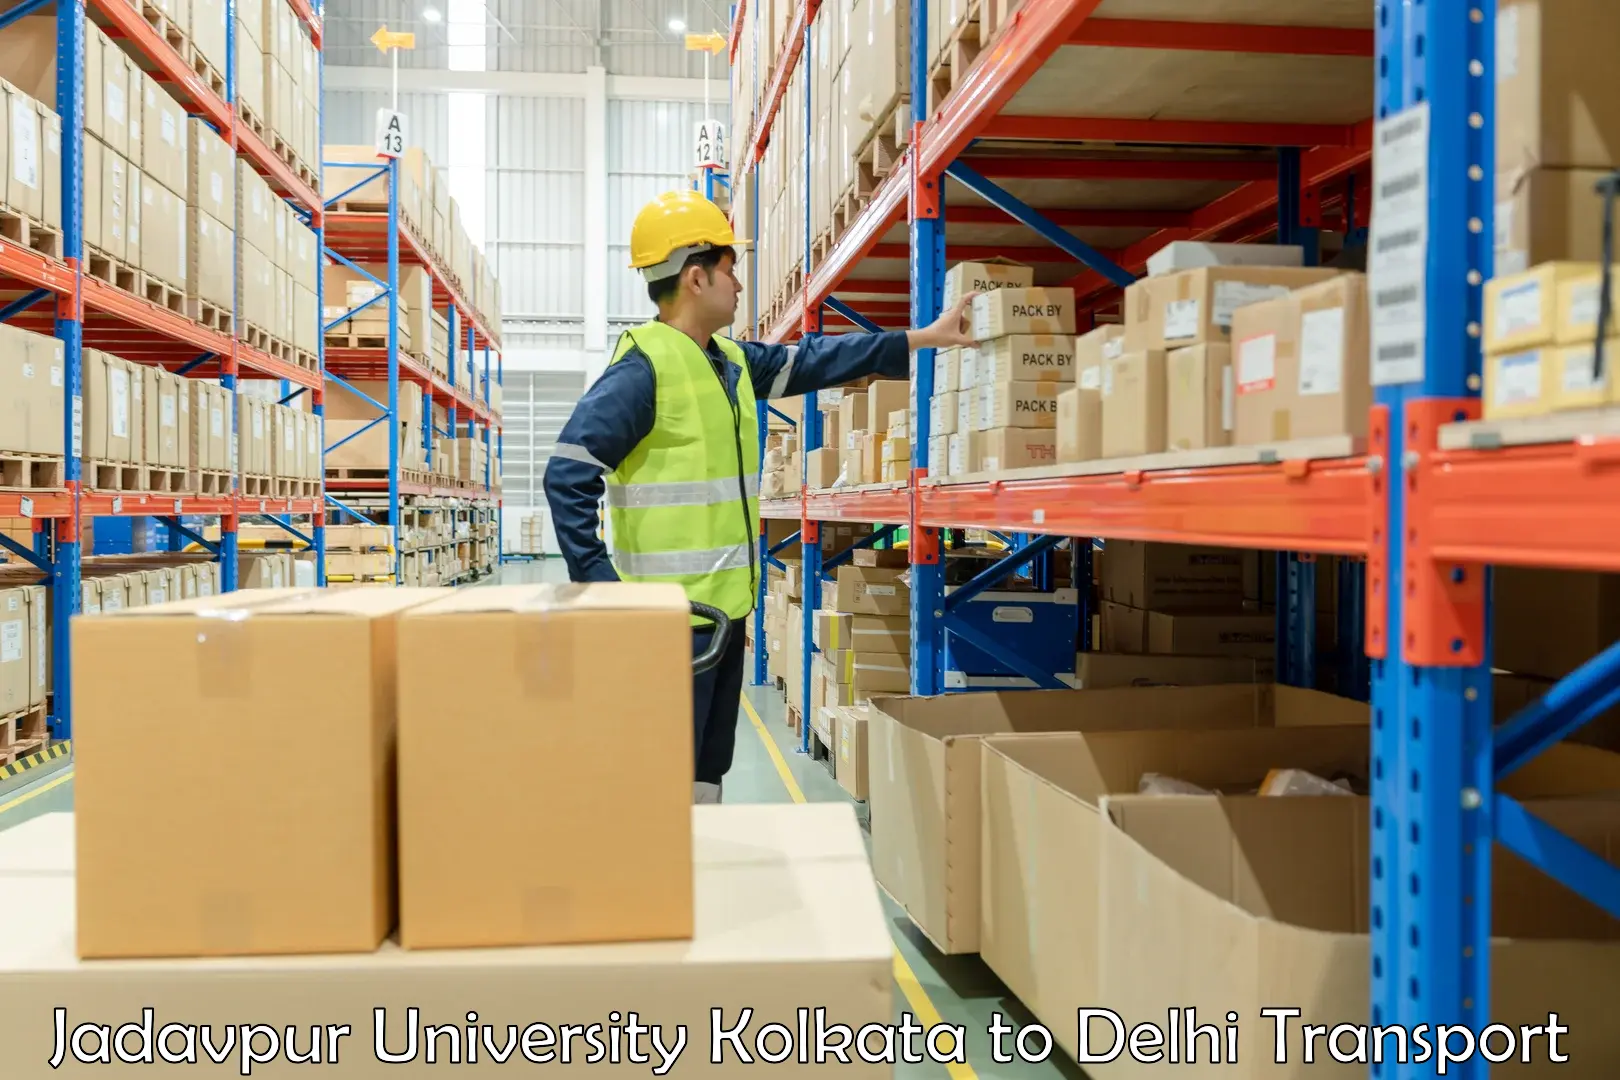 Container transport service Jadavpur University Kolkata to Delhi